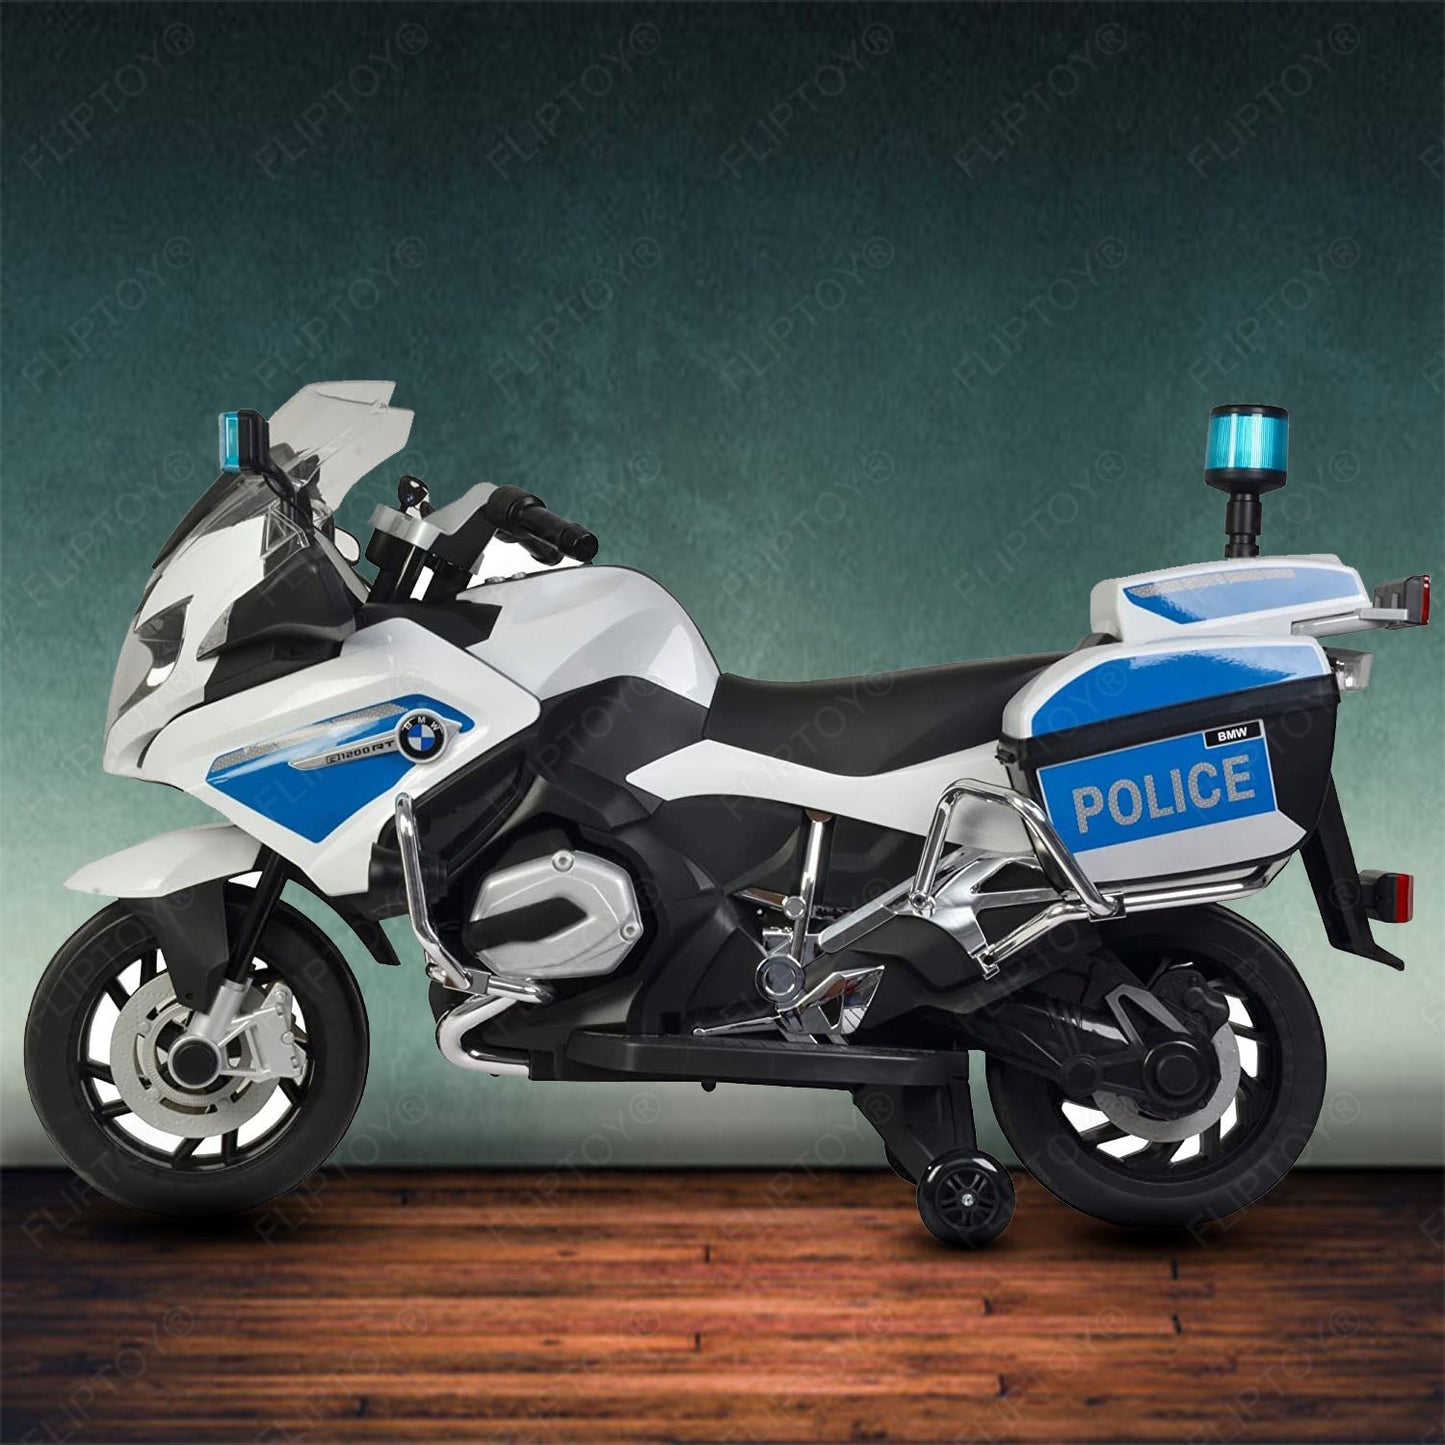 Kids ride on | police bike for kids | Model No. R 1200 RT | BMW-licensed ride on bike